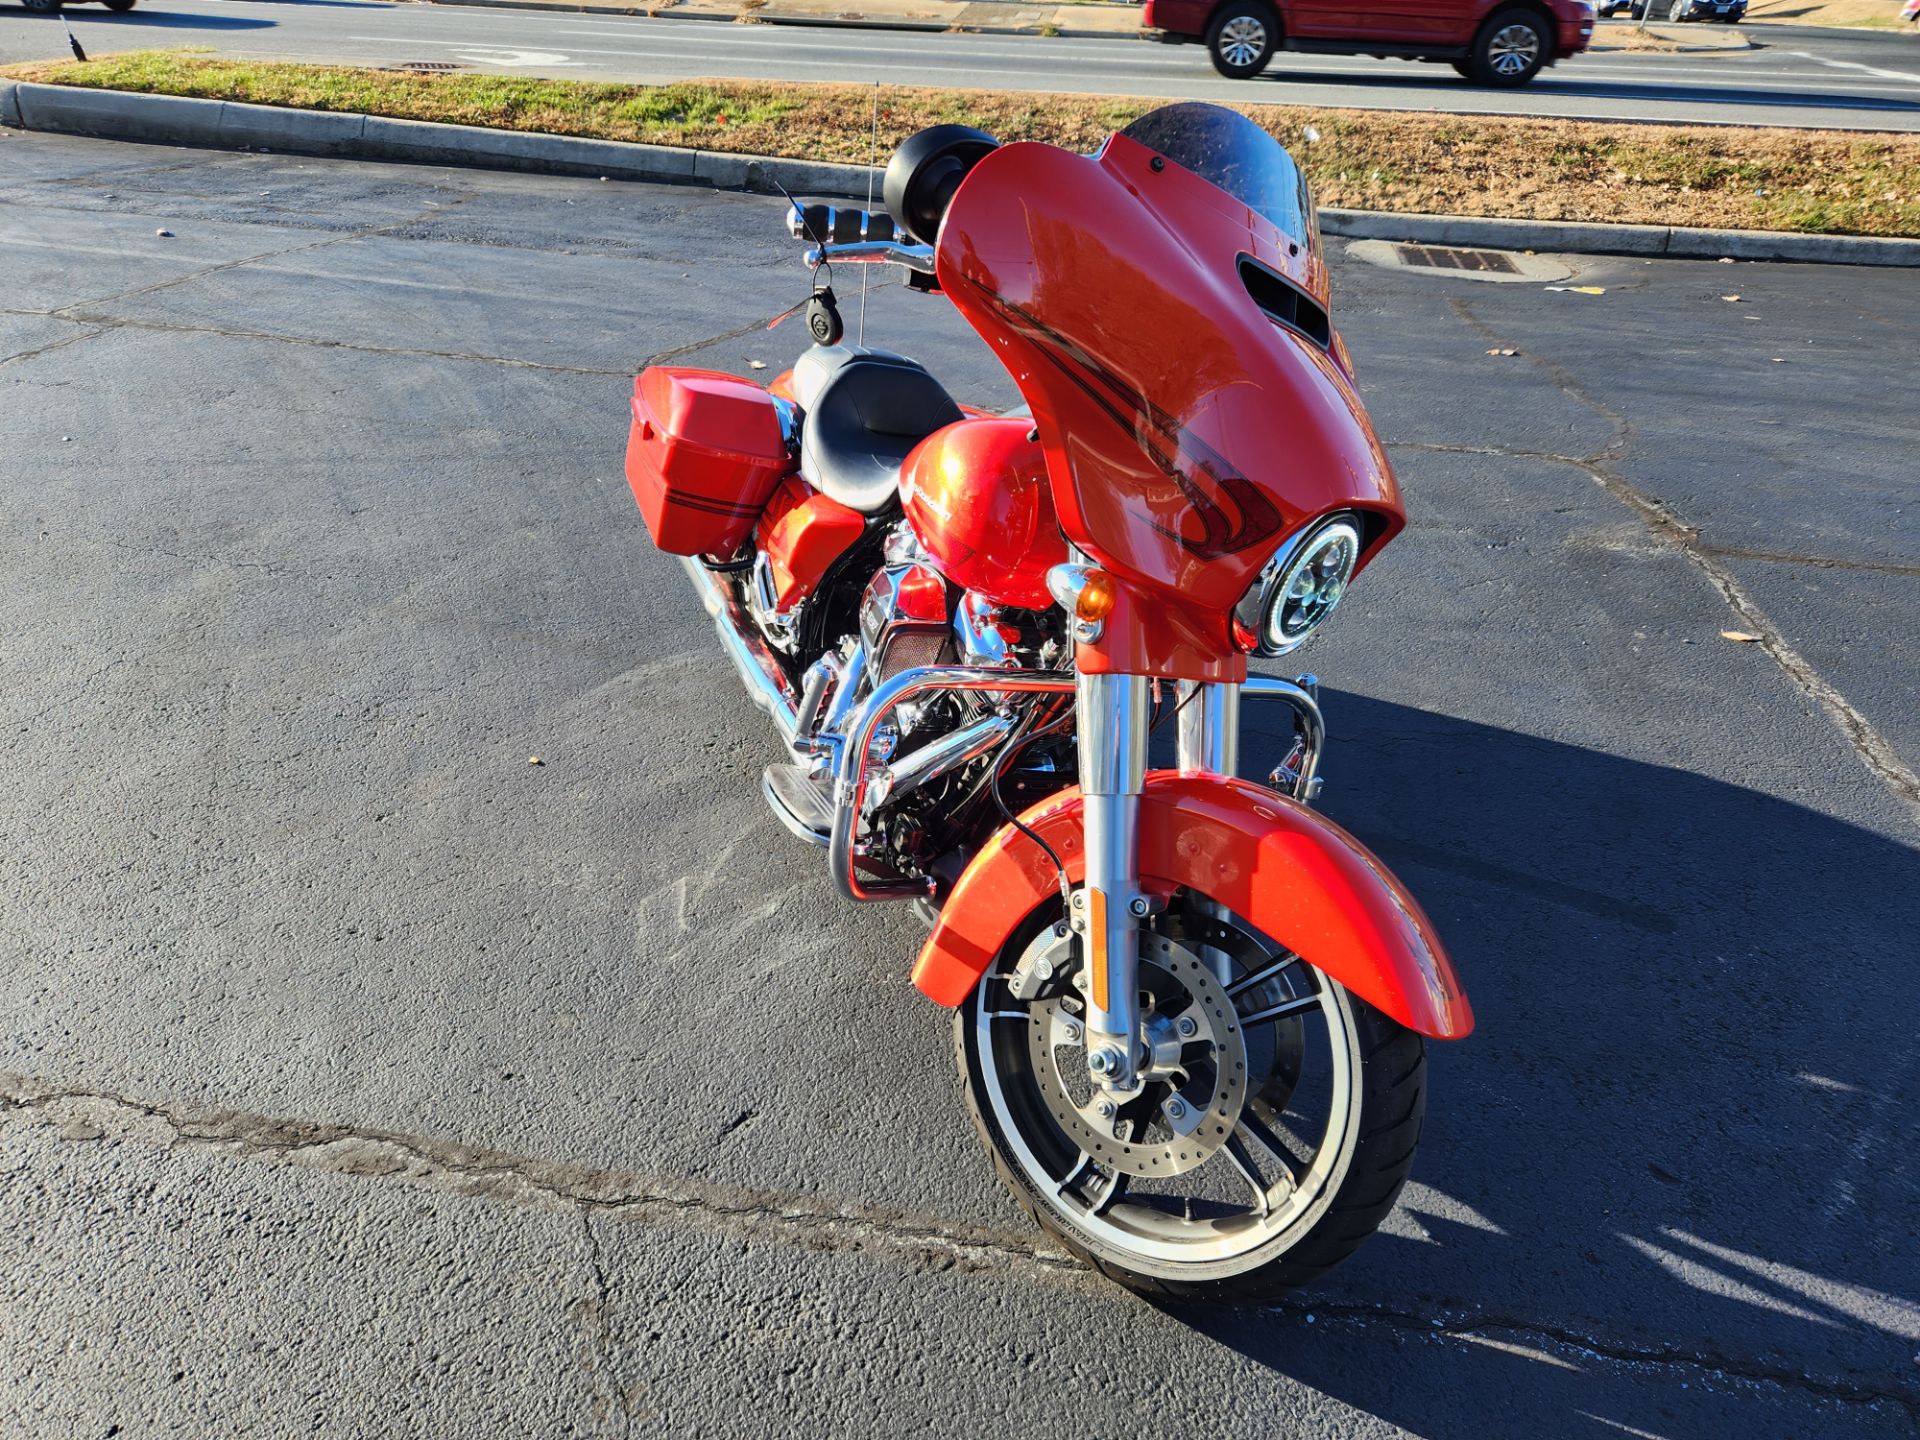 2017 Harley-Davidson Street Glide® Special in Lynchburg, Virginia - Photo 2